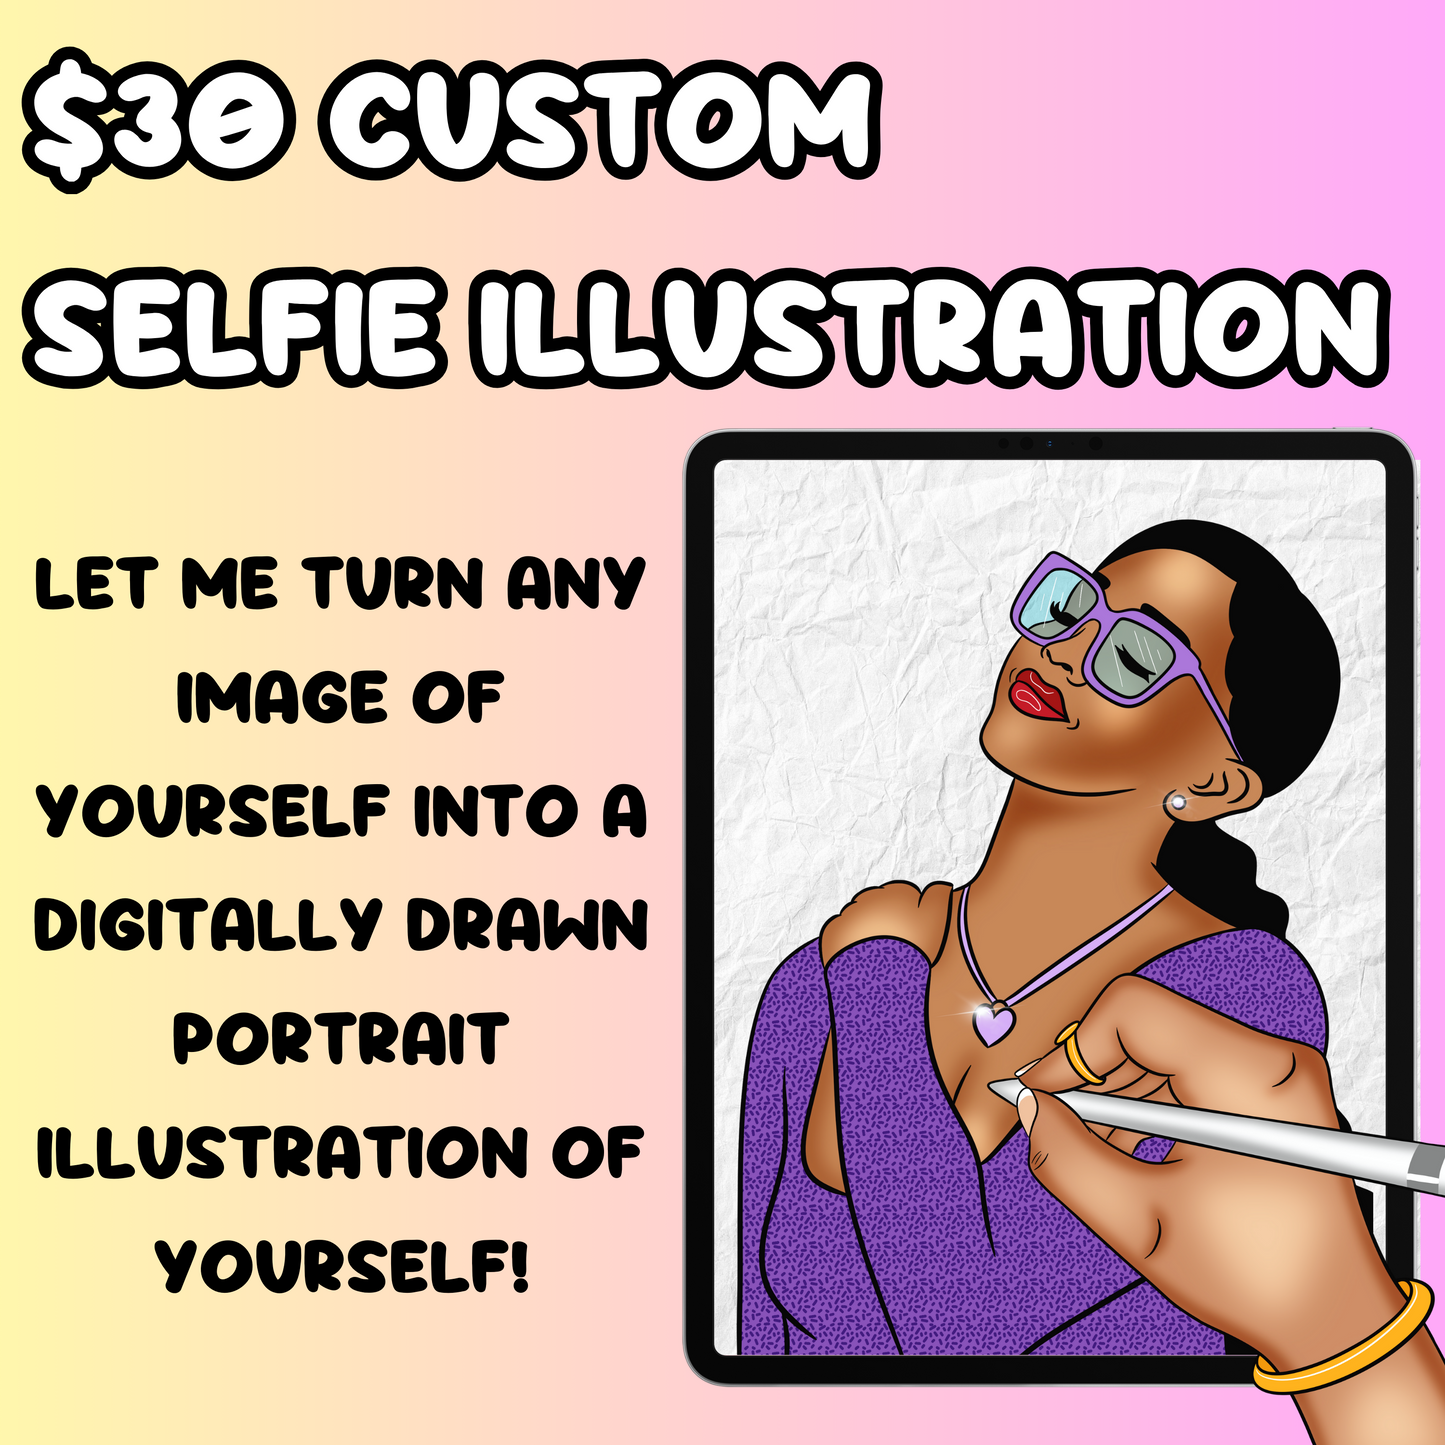 Selfie custom illustration